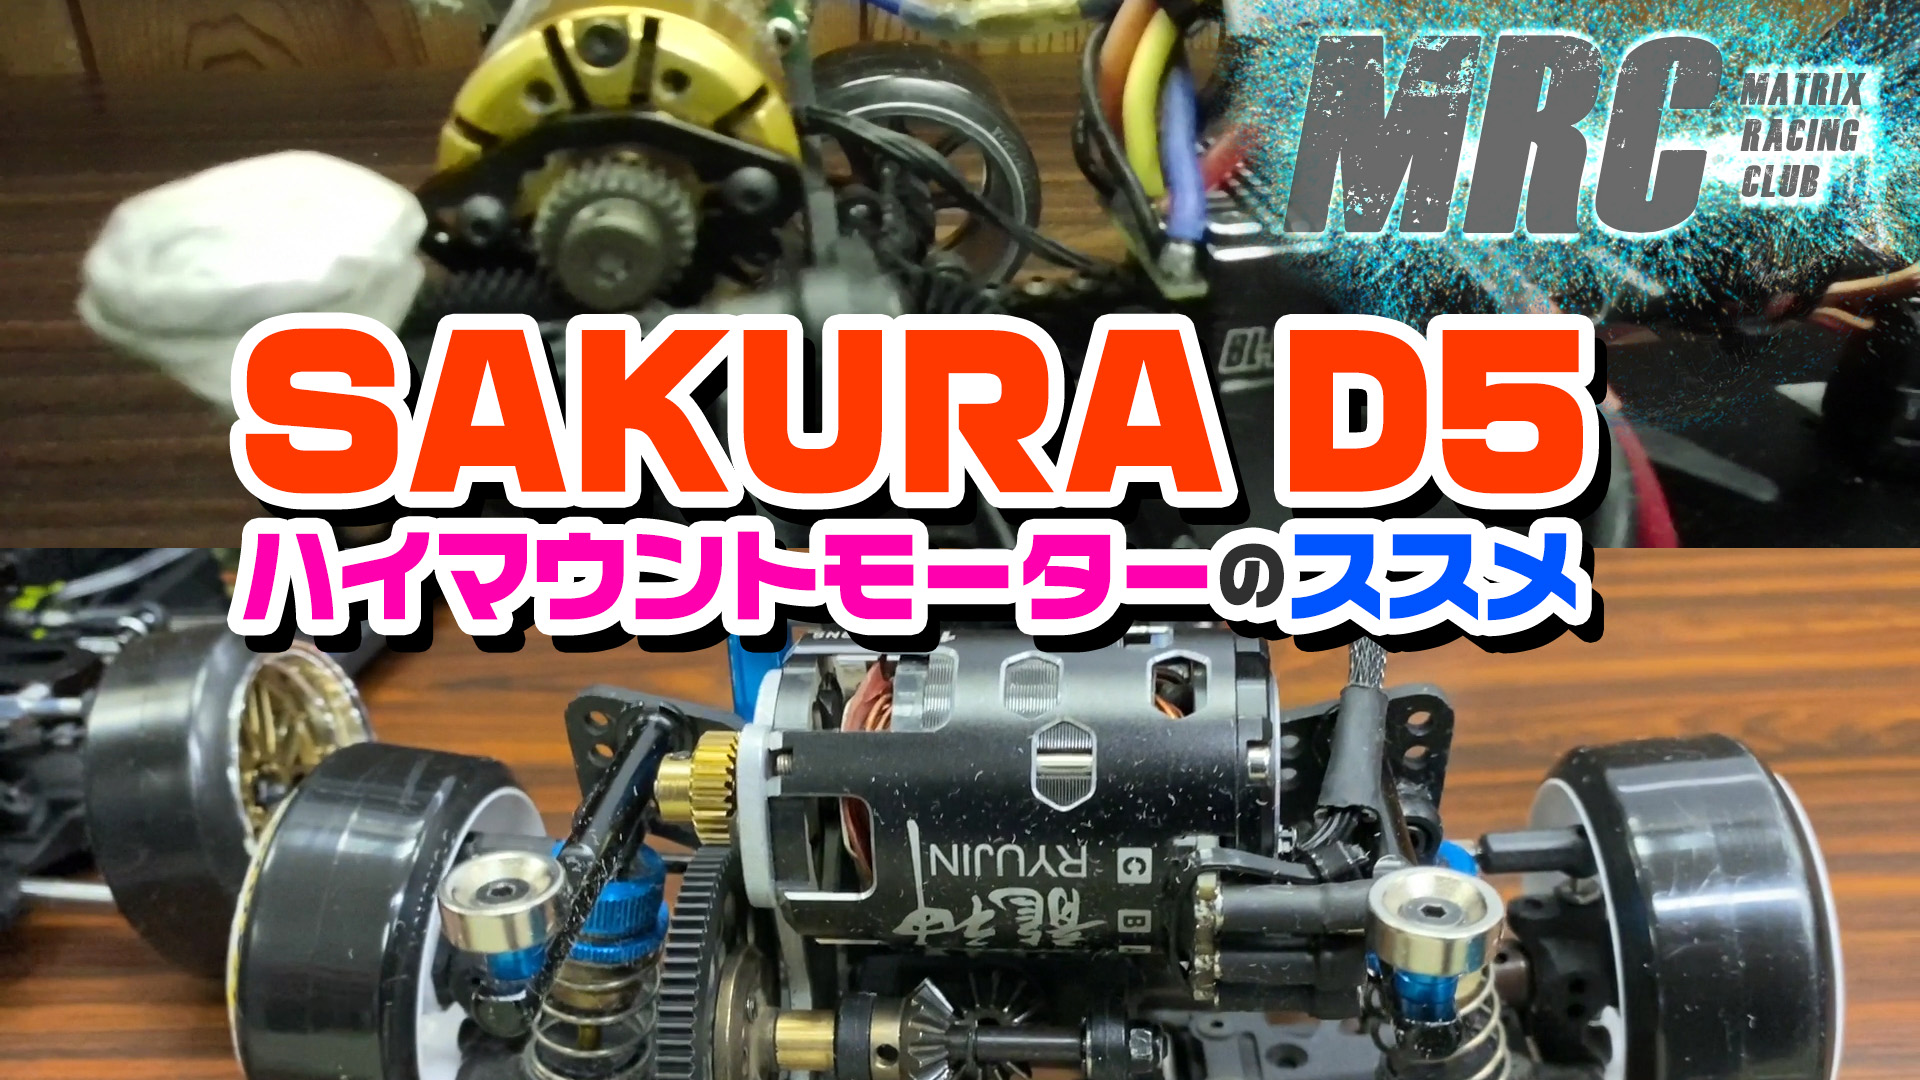 SAKURA D5 ハイマウントモーターのススメ - MRC【MATRIX RACING CLUB 